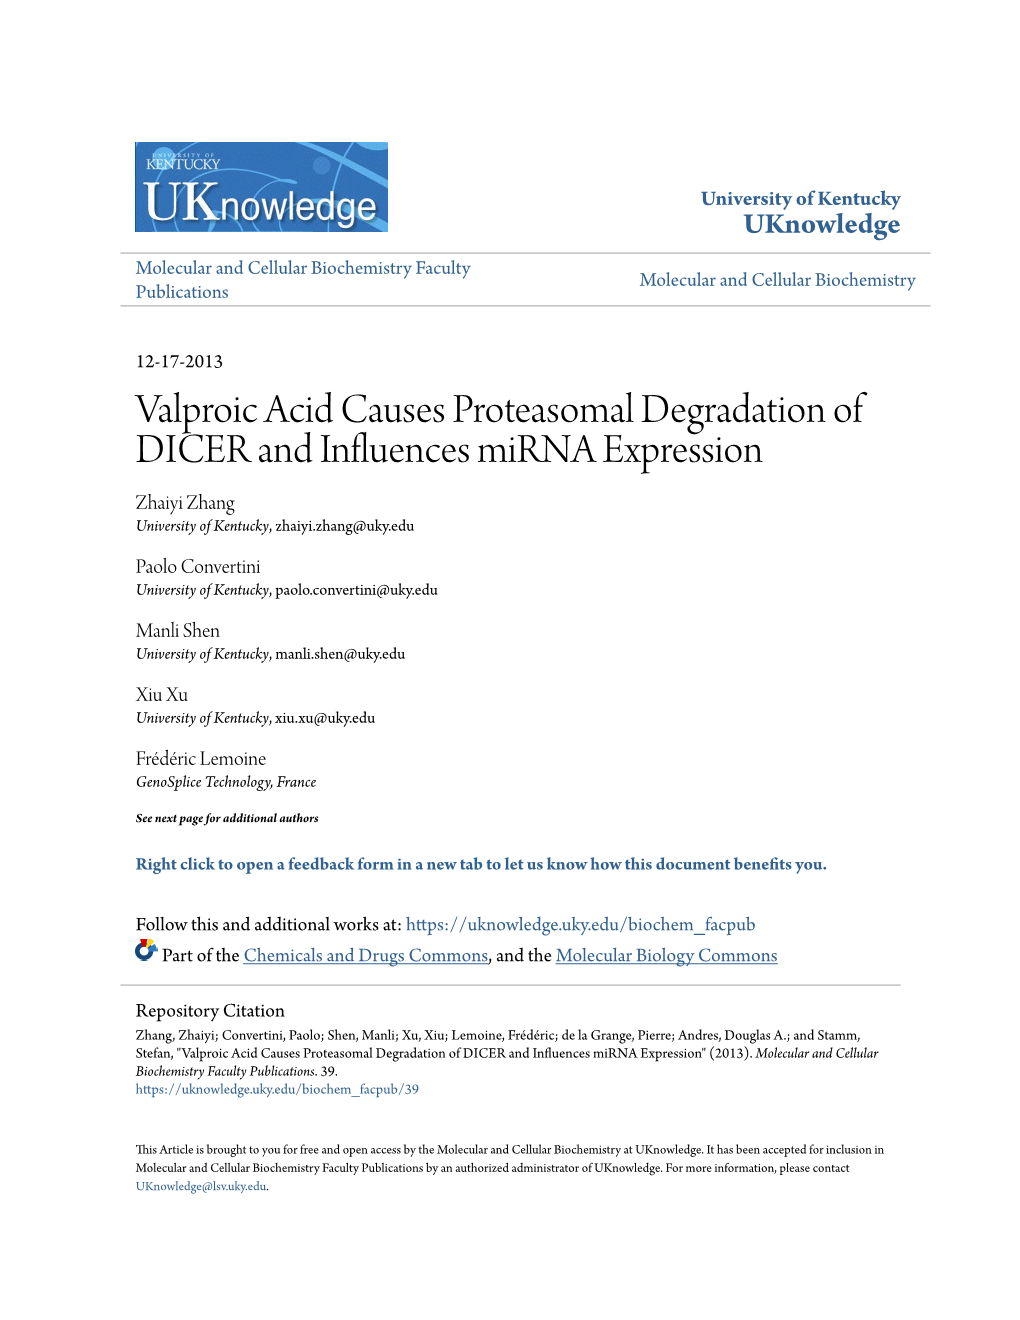 Valproic Acid Causes Proteasomal Degradation of DICER and Influences Mirna Expression Zhaiyi Zhang University of Kentucky, Zhaiyi.Zhang@Uky.Edu